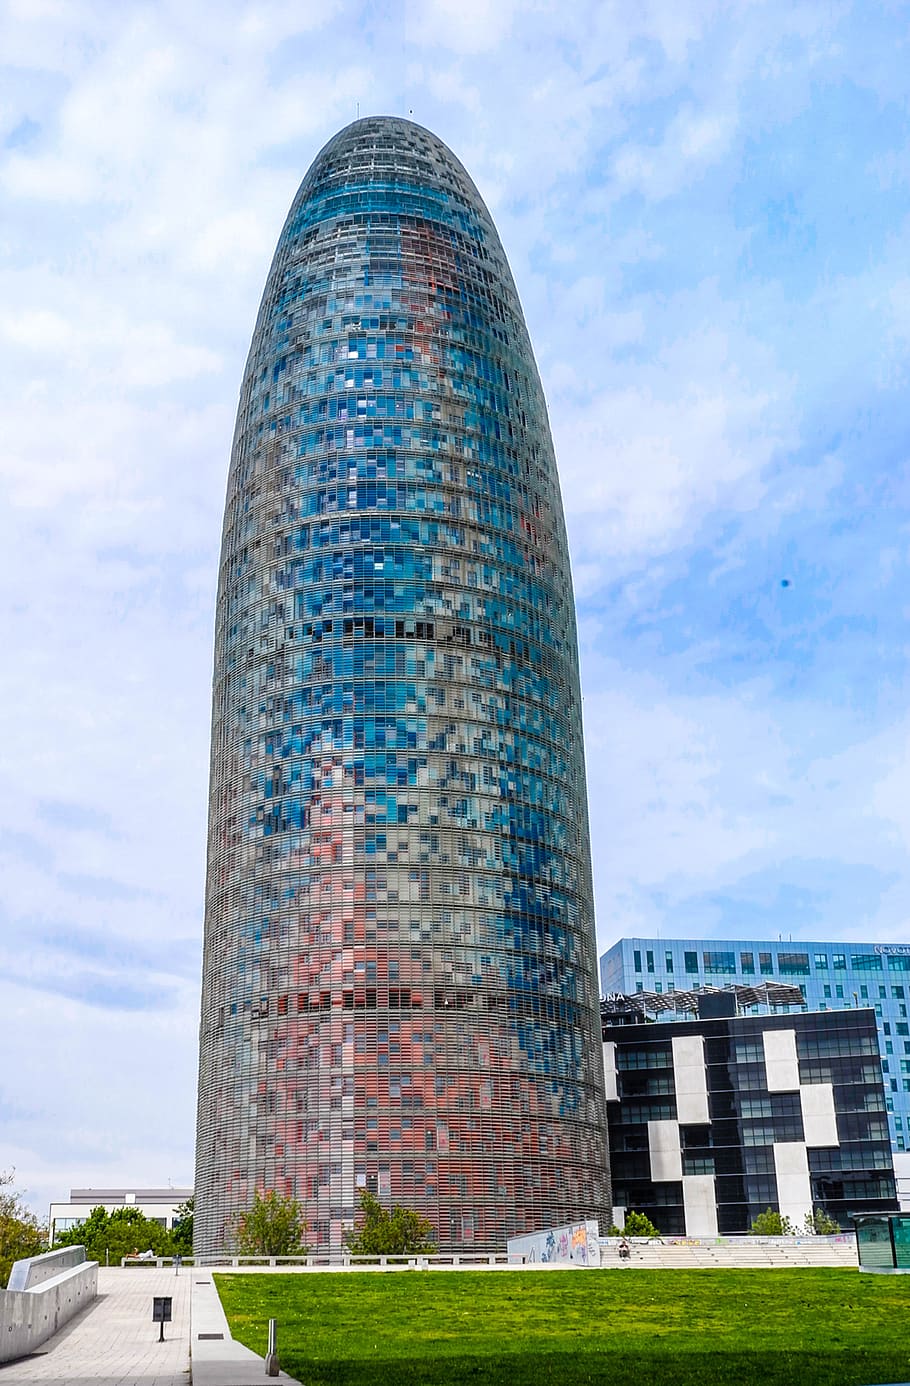 barcelona, torre glòries, tower, spain, catalonia, architecture, building, city, landmark, urban